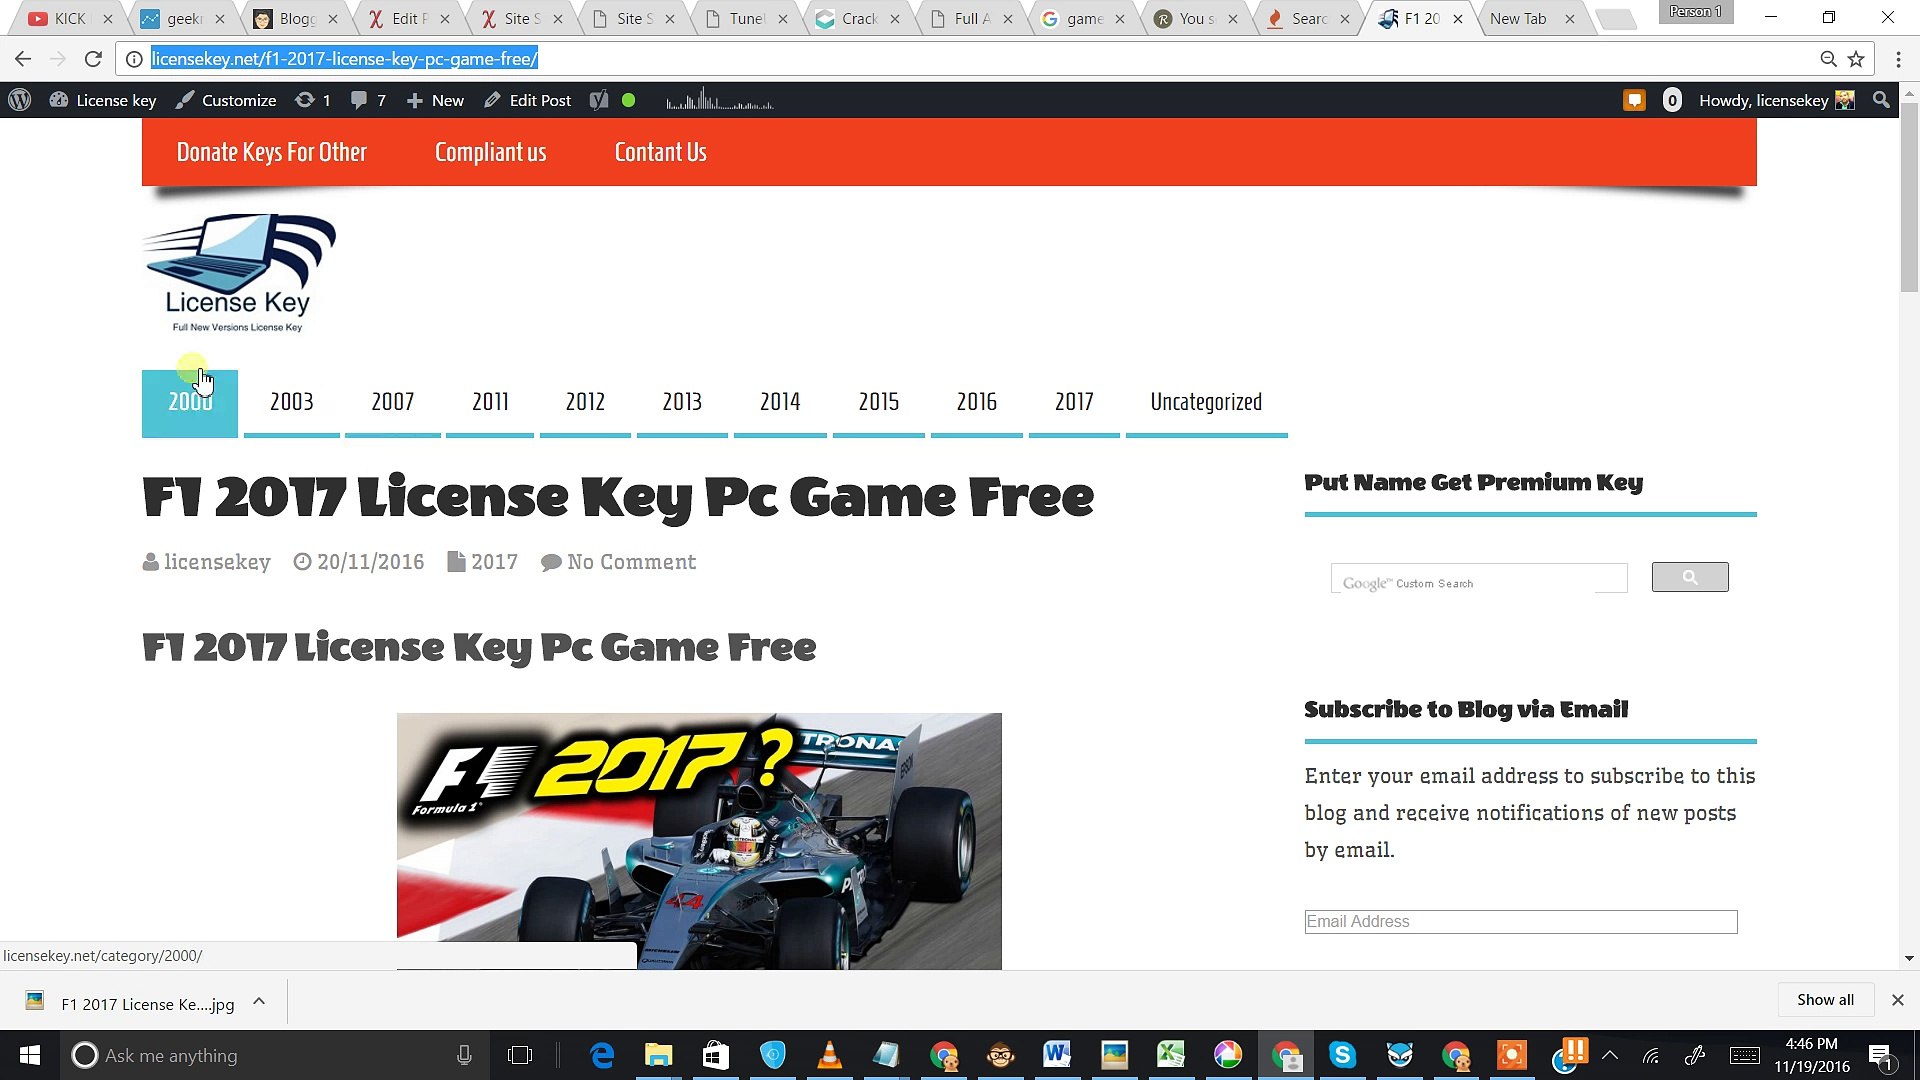 F1 2017 License Key Pc Game Free - video Dailymotion